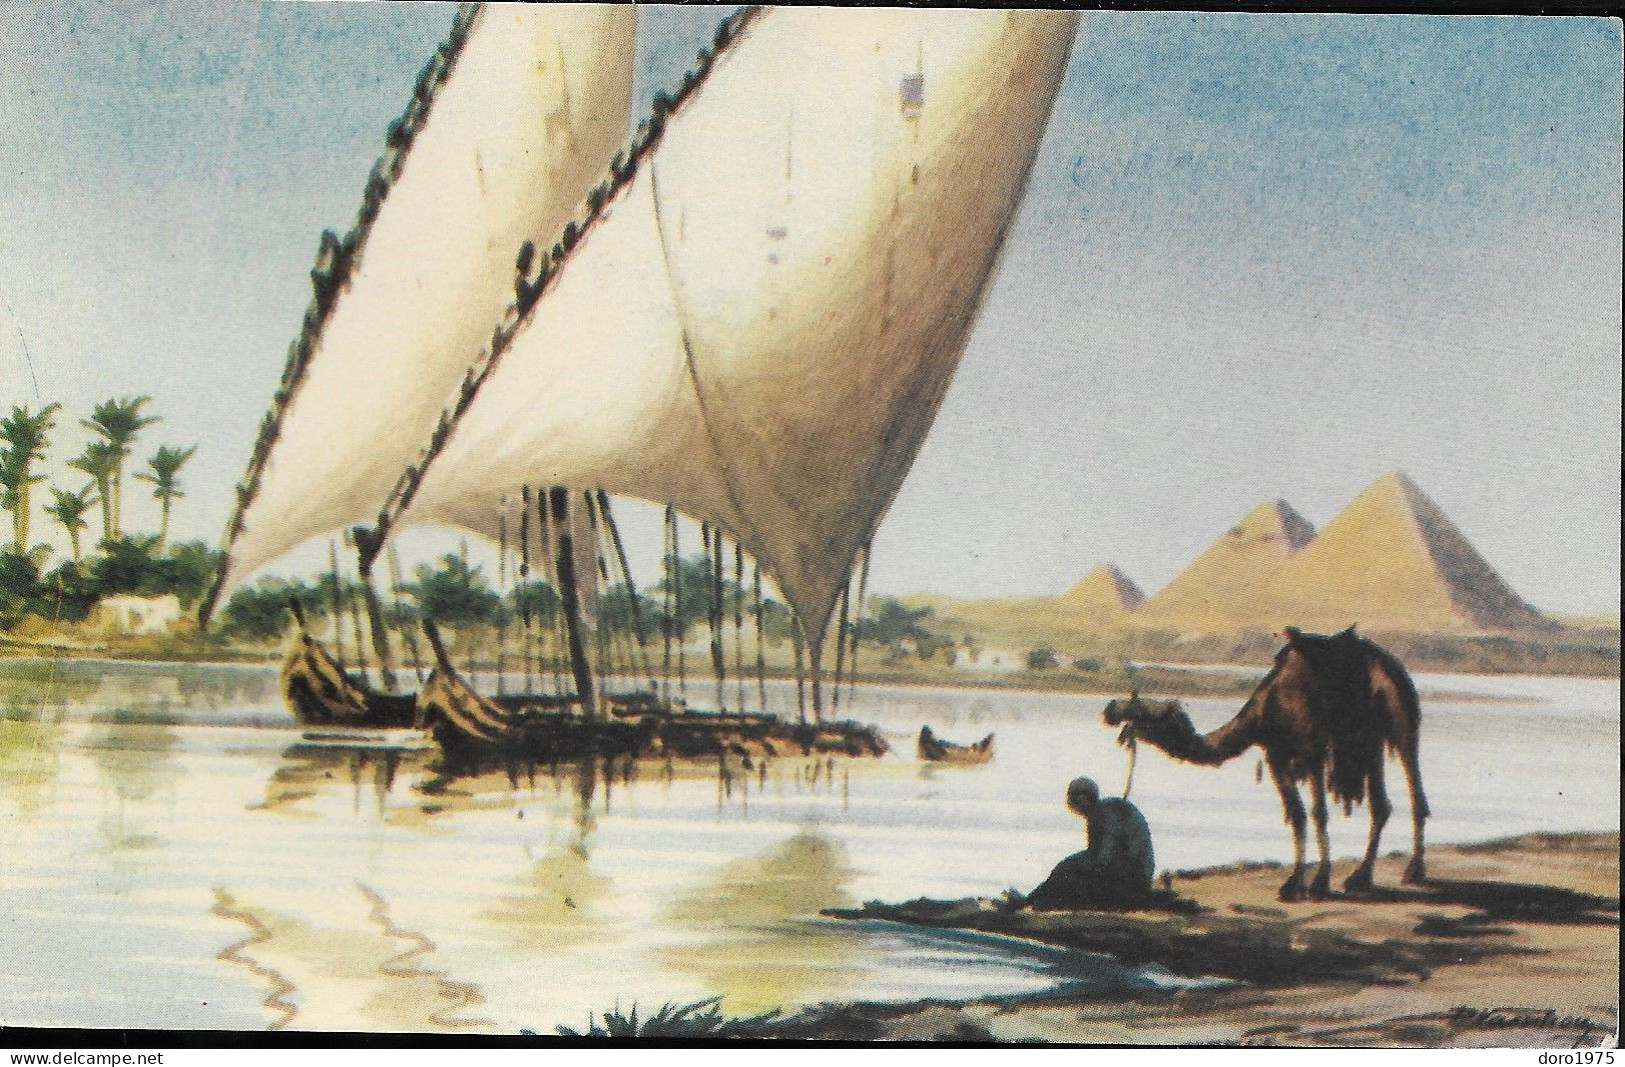 EGYPT - Nile Sailing Boats - D. Vassiliou - No. 7 - Unused Postcard (03) - Pyramiden